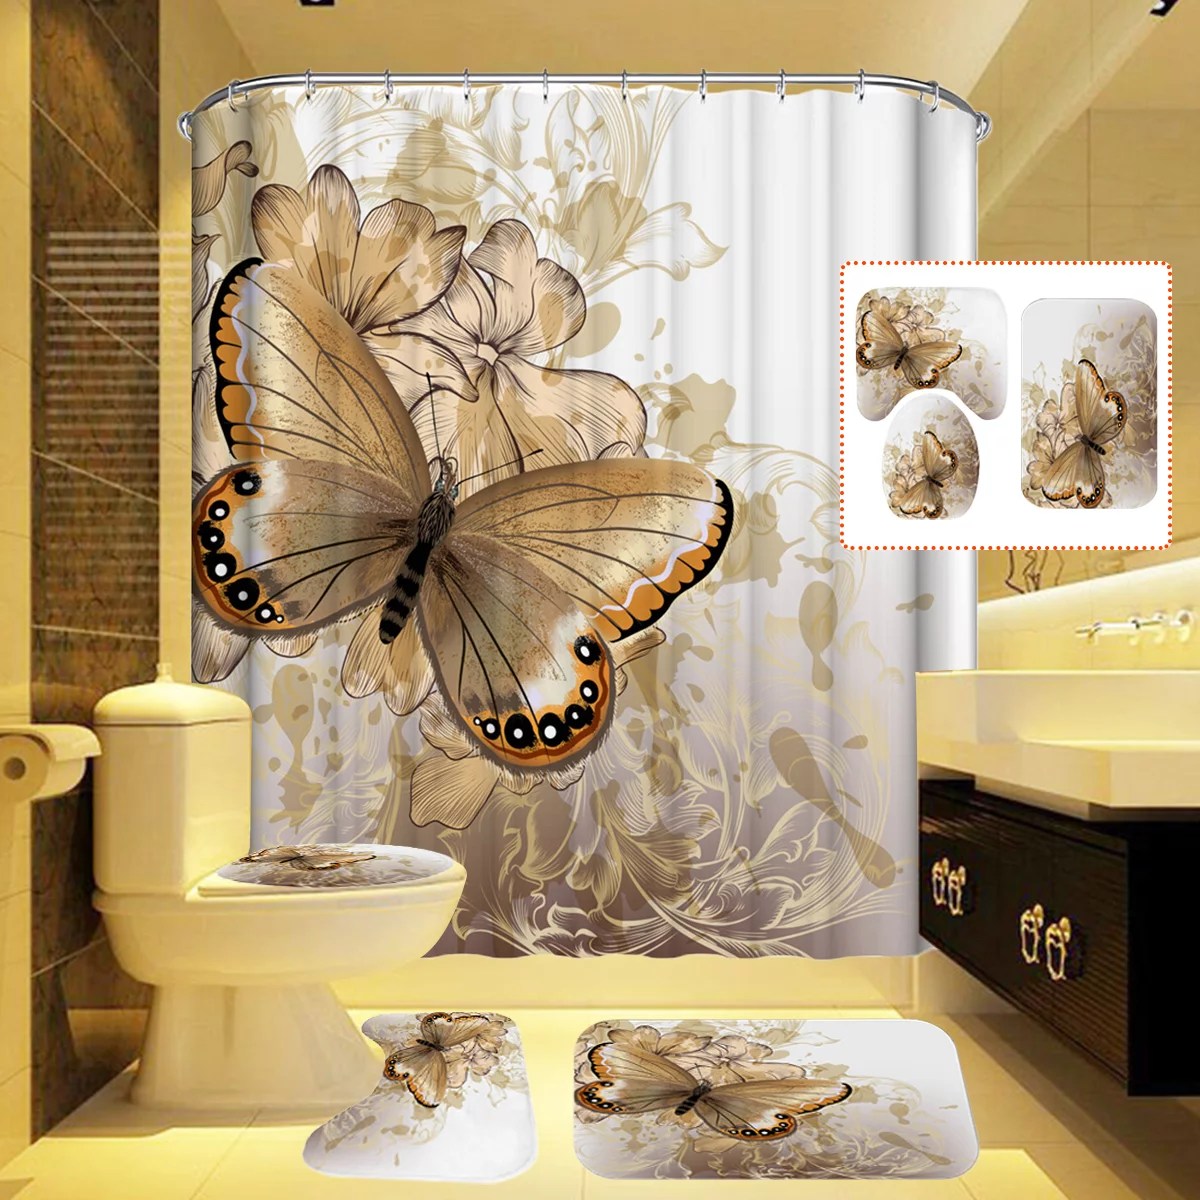 Butterfly Bathroom Sets Imitation Butterflies Towel Set Zazzle.co